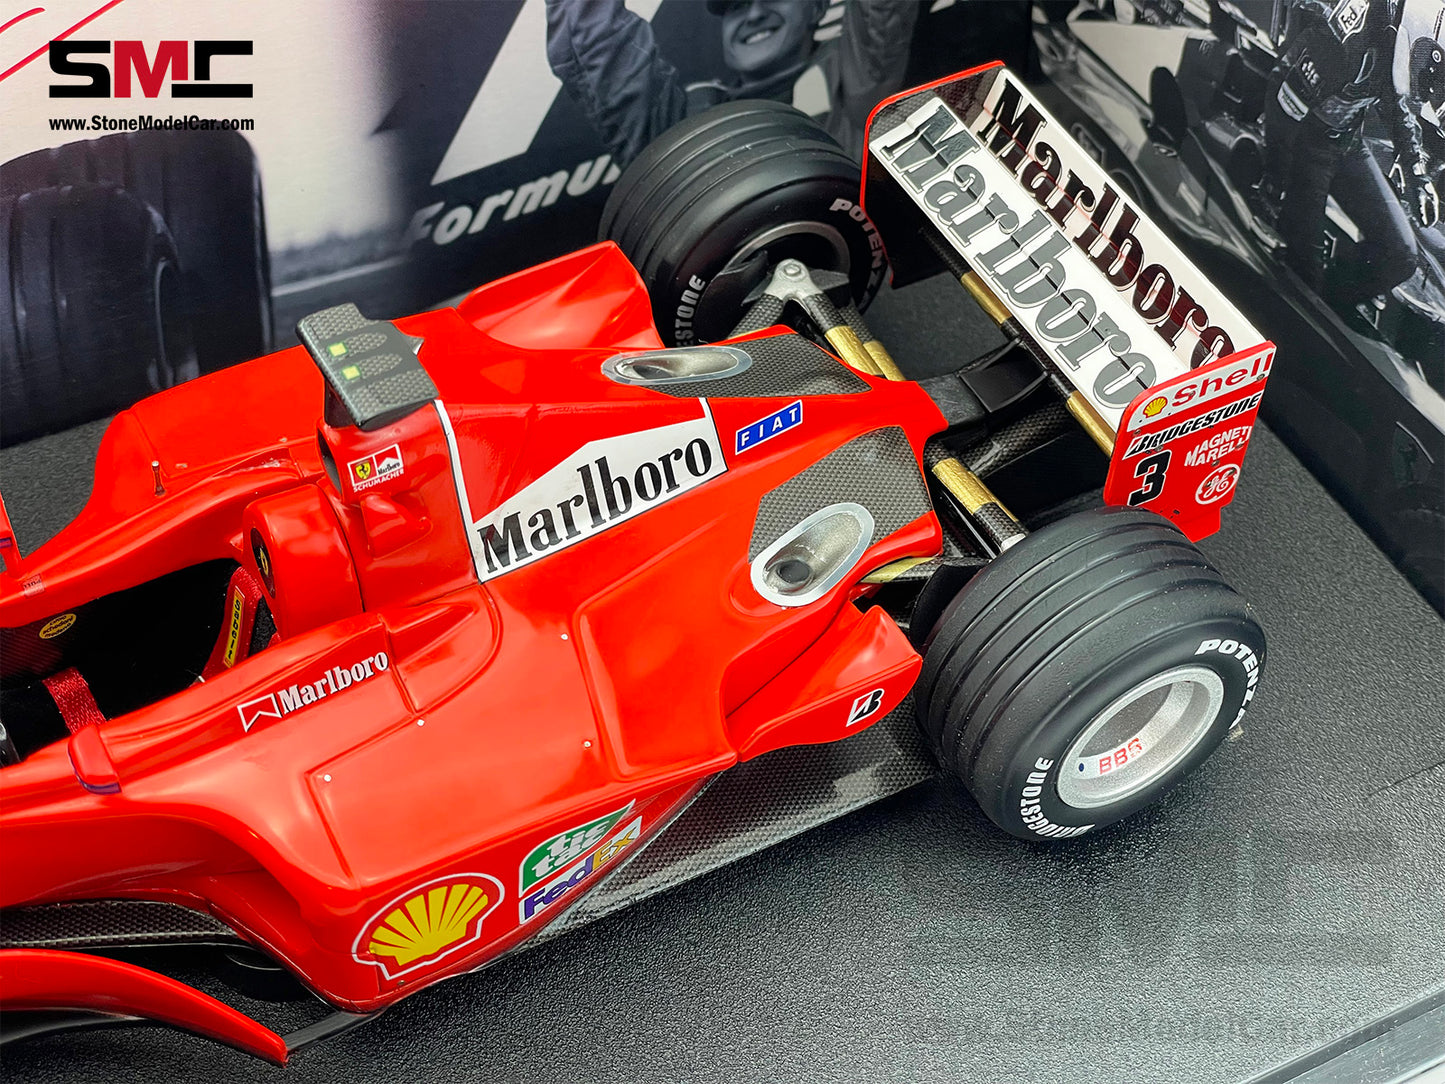 [Pre-Owned] Ferrari F1-2000 #3 Michael Schumacher Japan GP 2000 3x Times World Champion Hot Wheels Elite 1:18